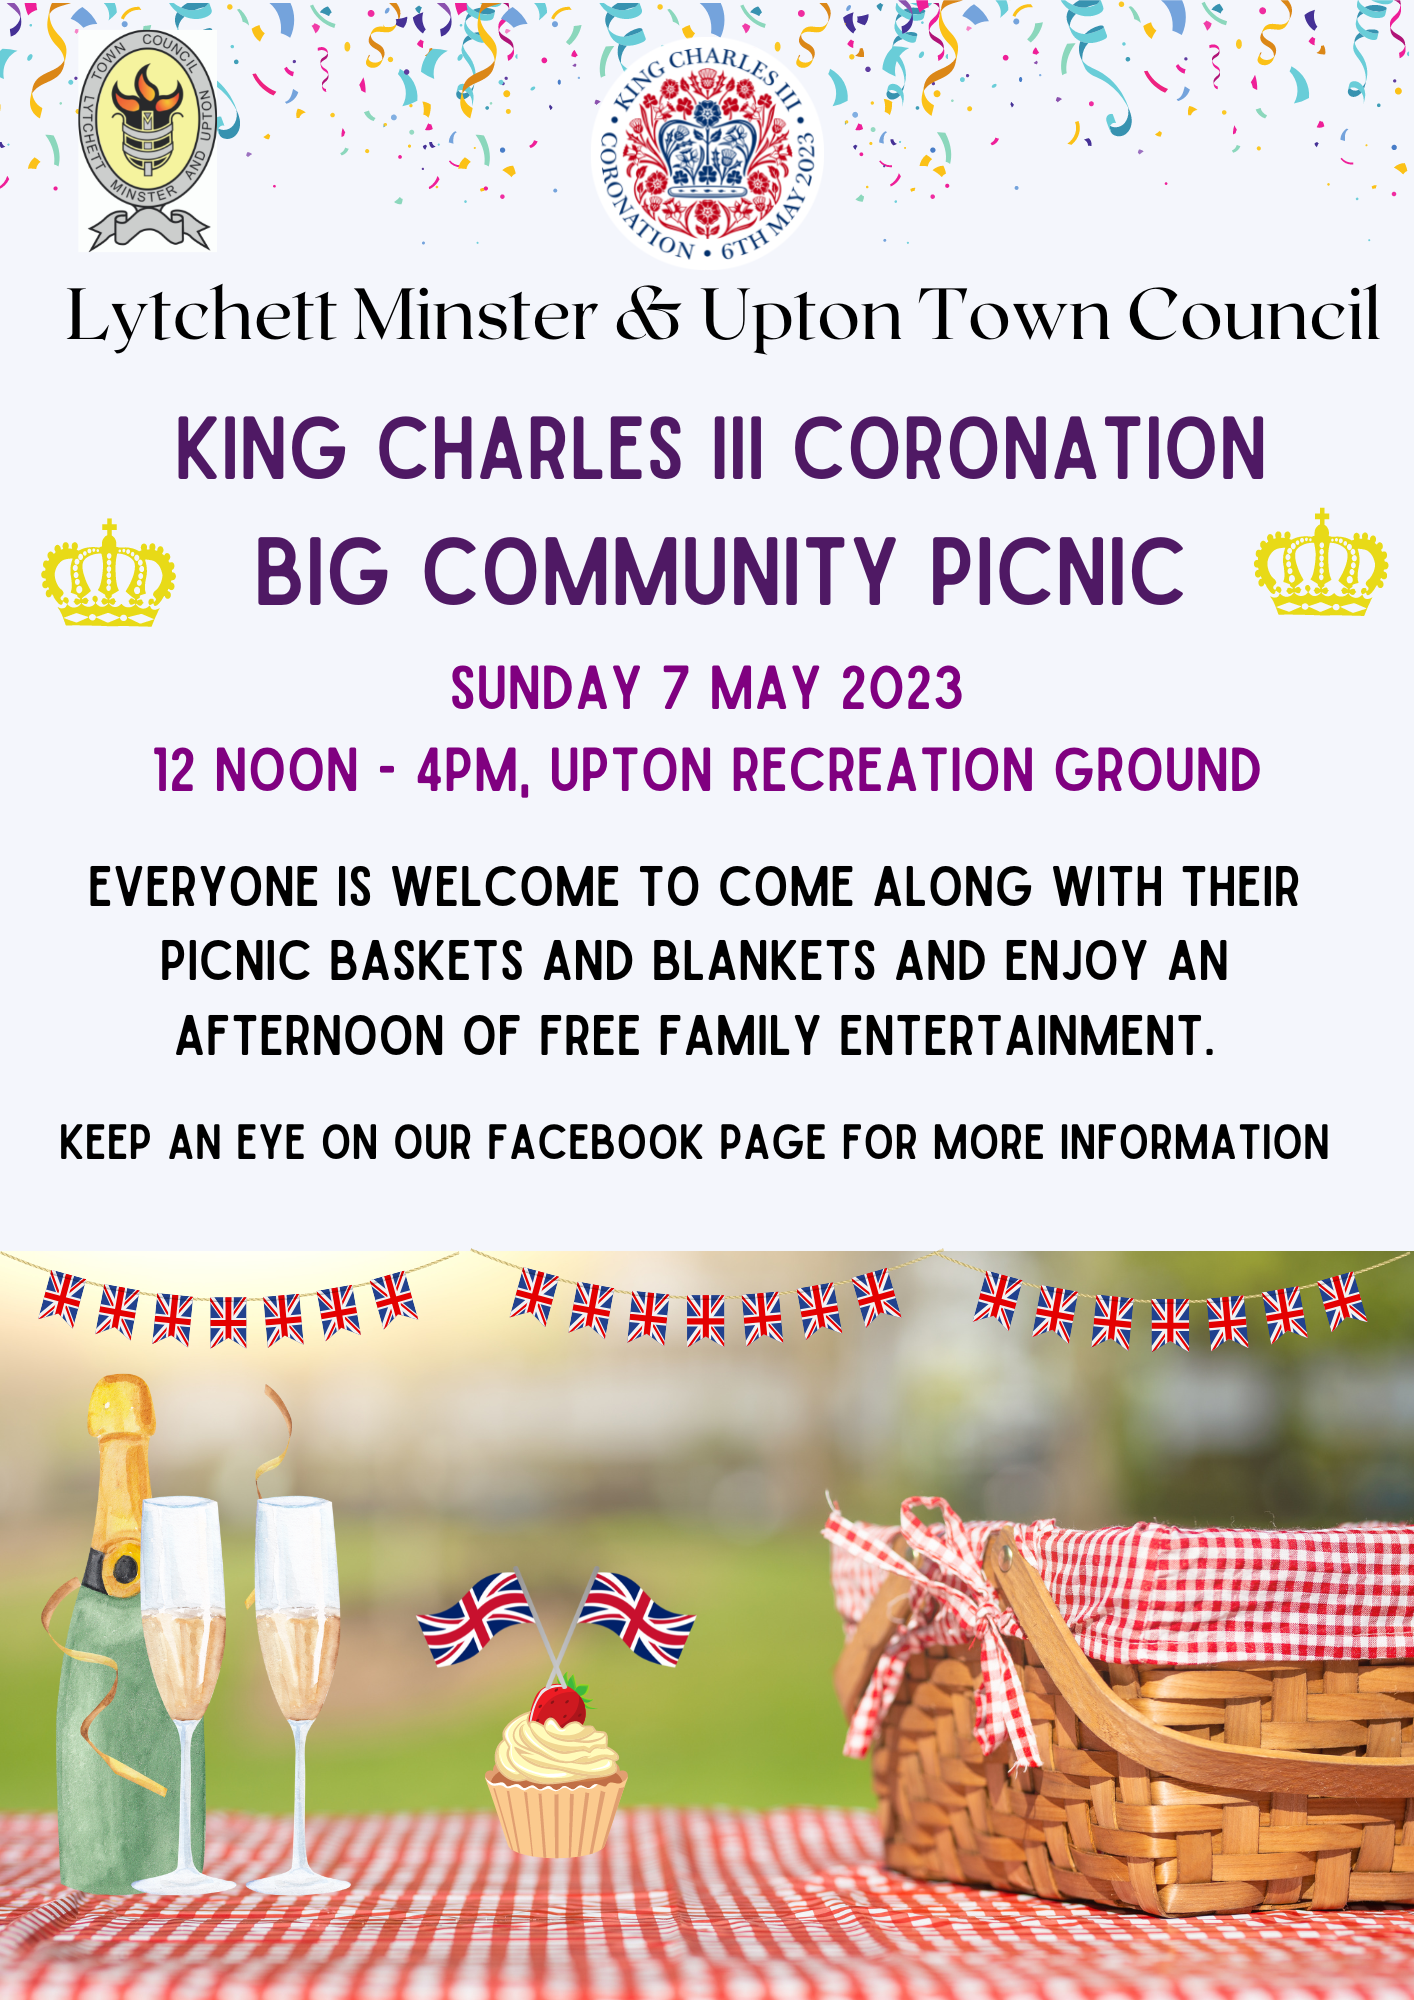 King Charles III Coronation - Big Community Picnic